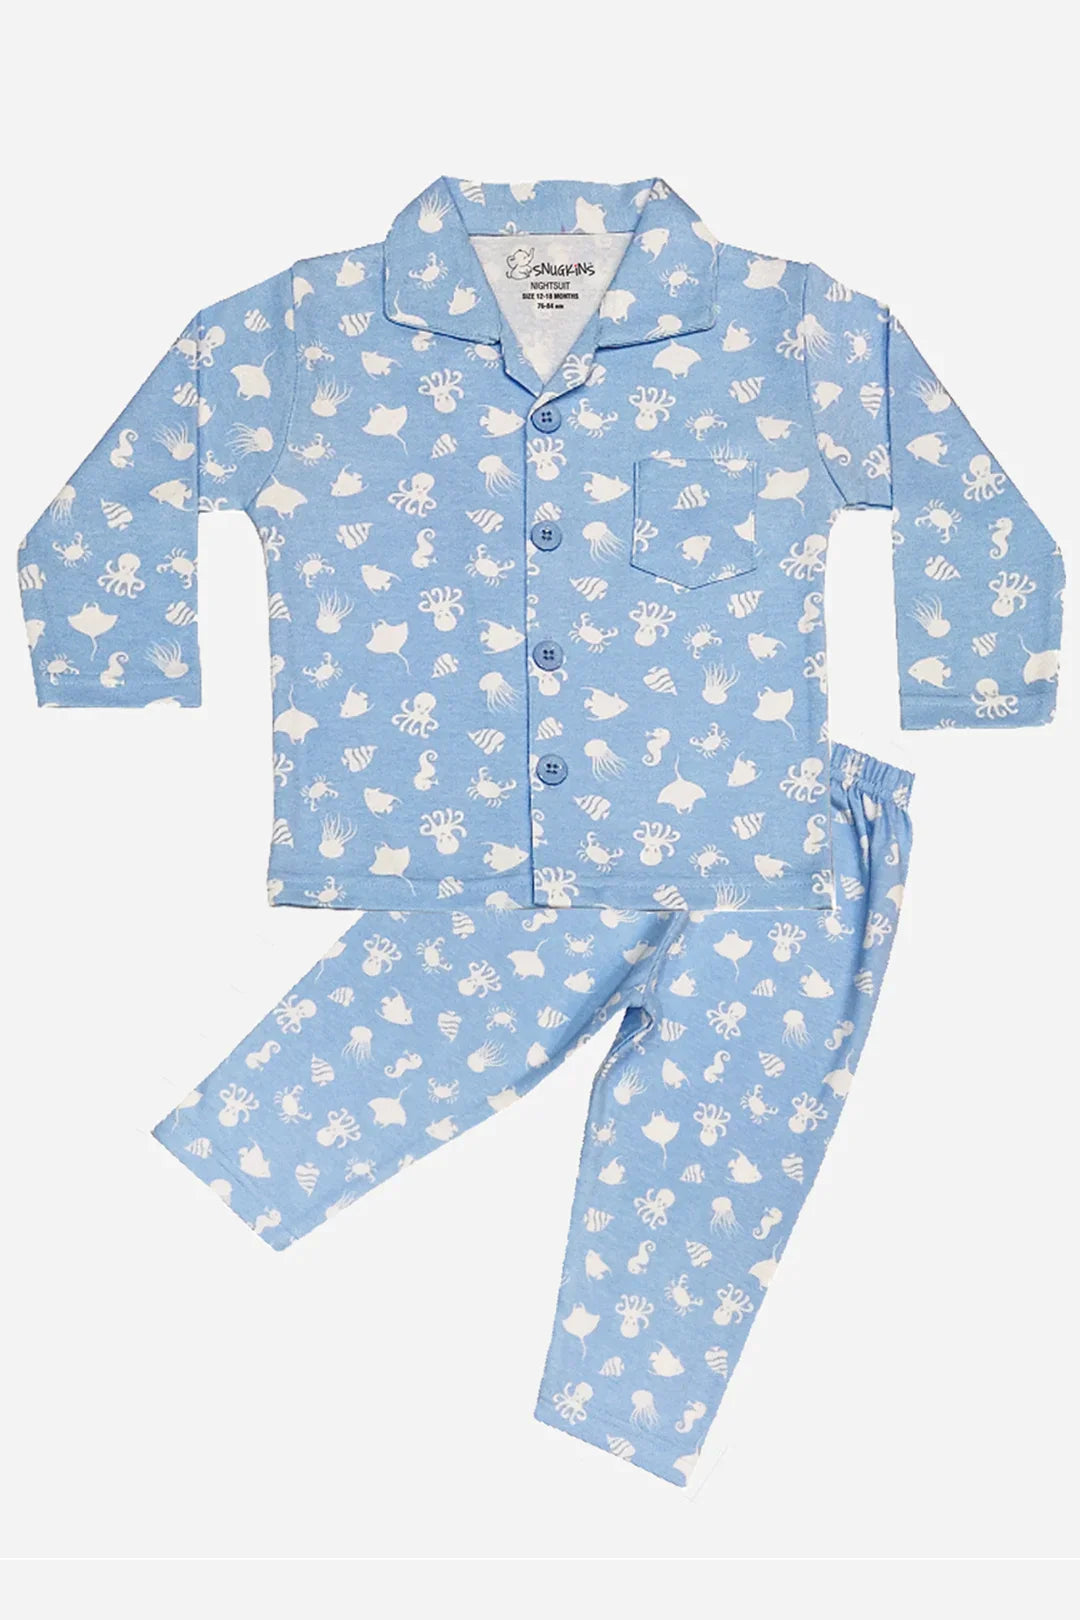 Full Sleeves Baby Octopus Printed Pajamas - Sleep Wear for Baby/Kids - Boys and Girls